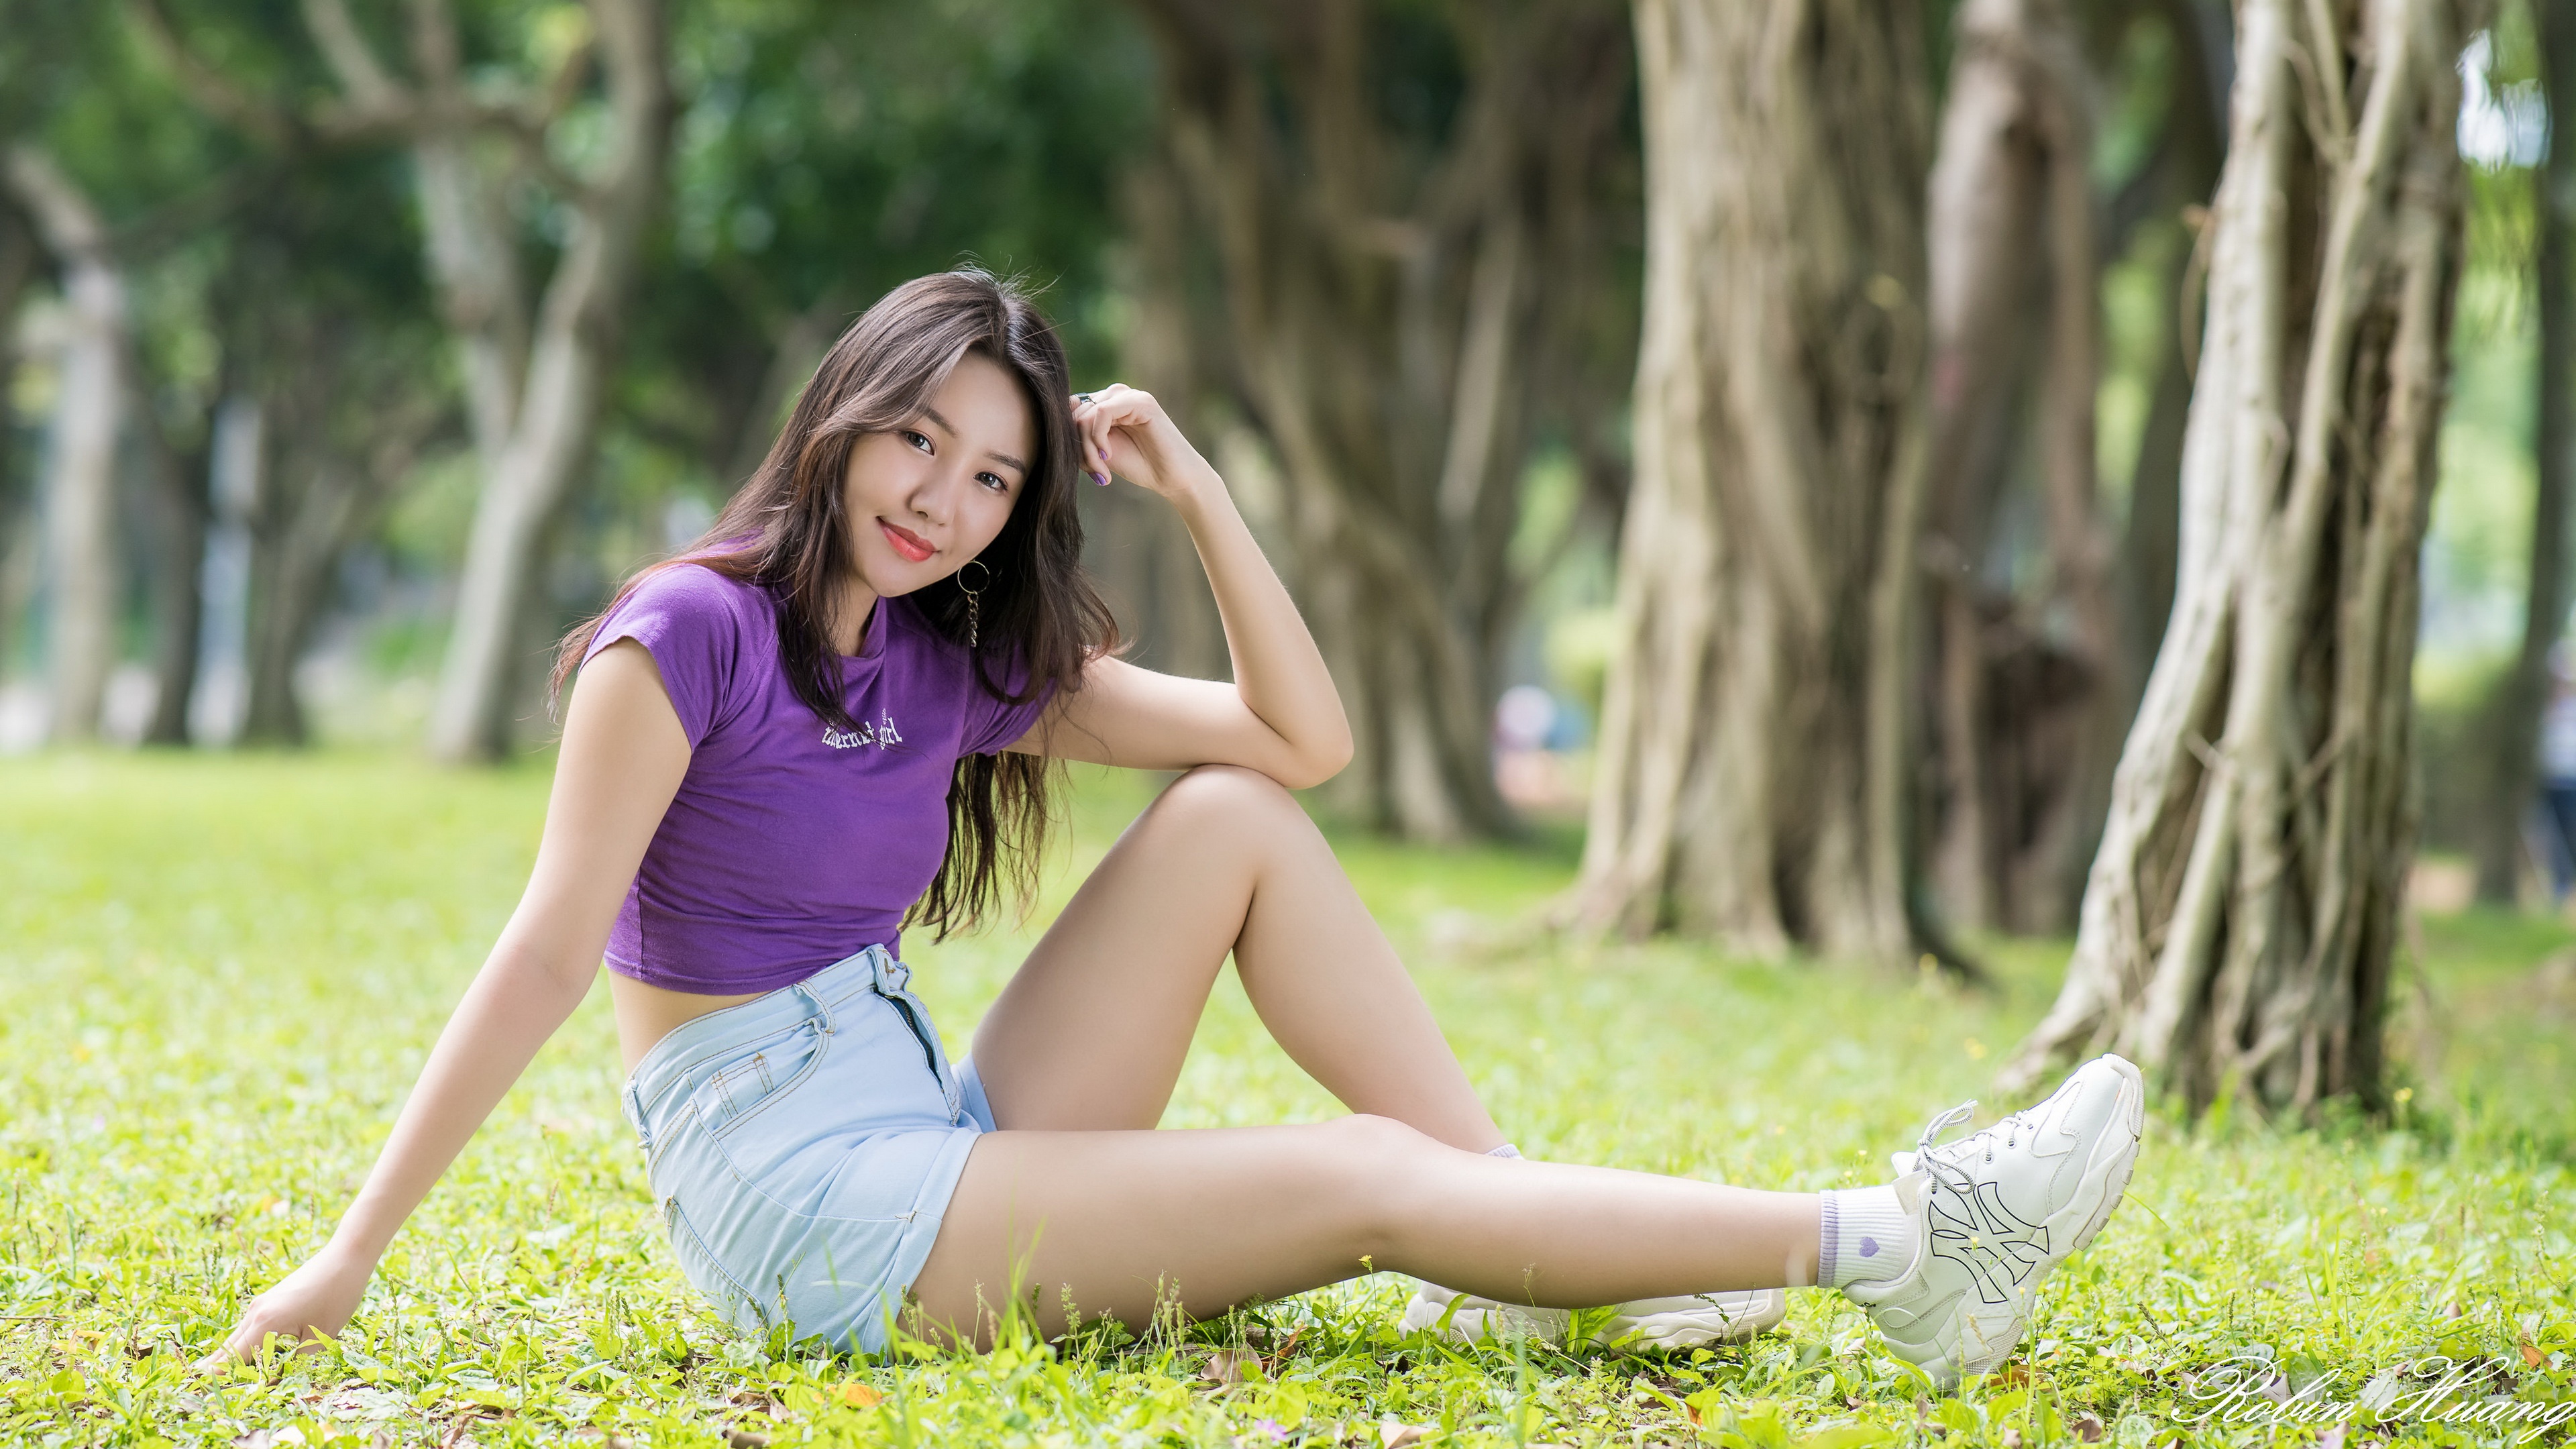 Asian Women Model Depth Of Field Long Hair Trees Bushes Shorts Sitting Shor...